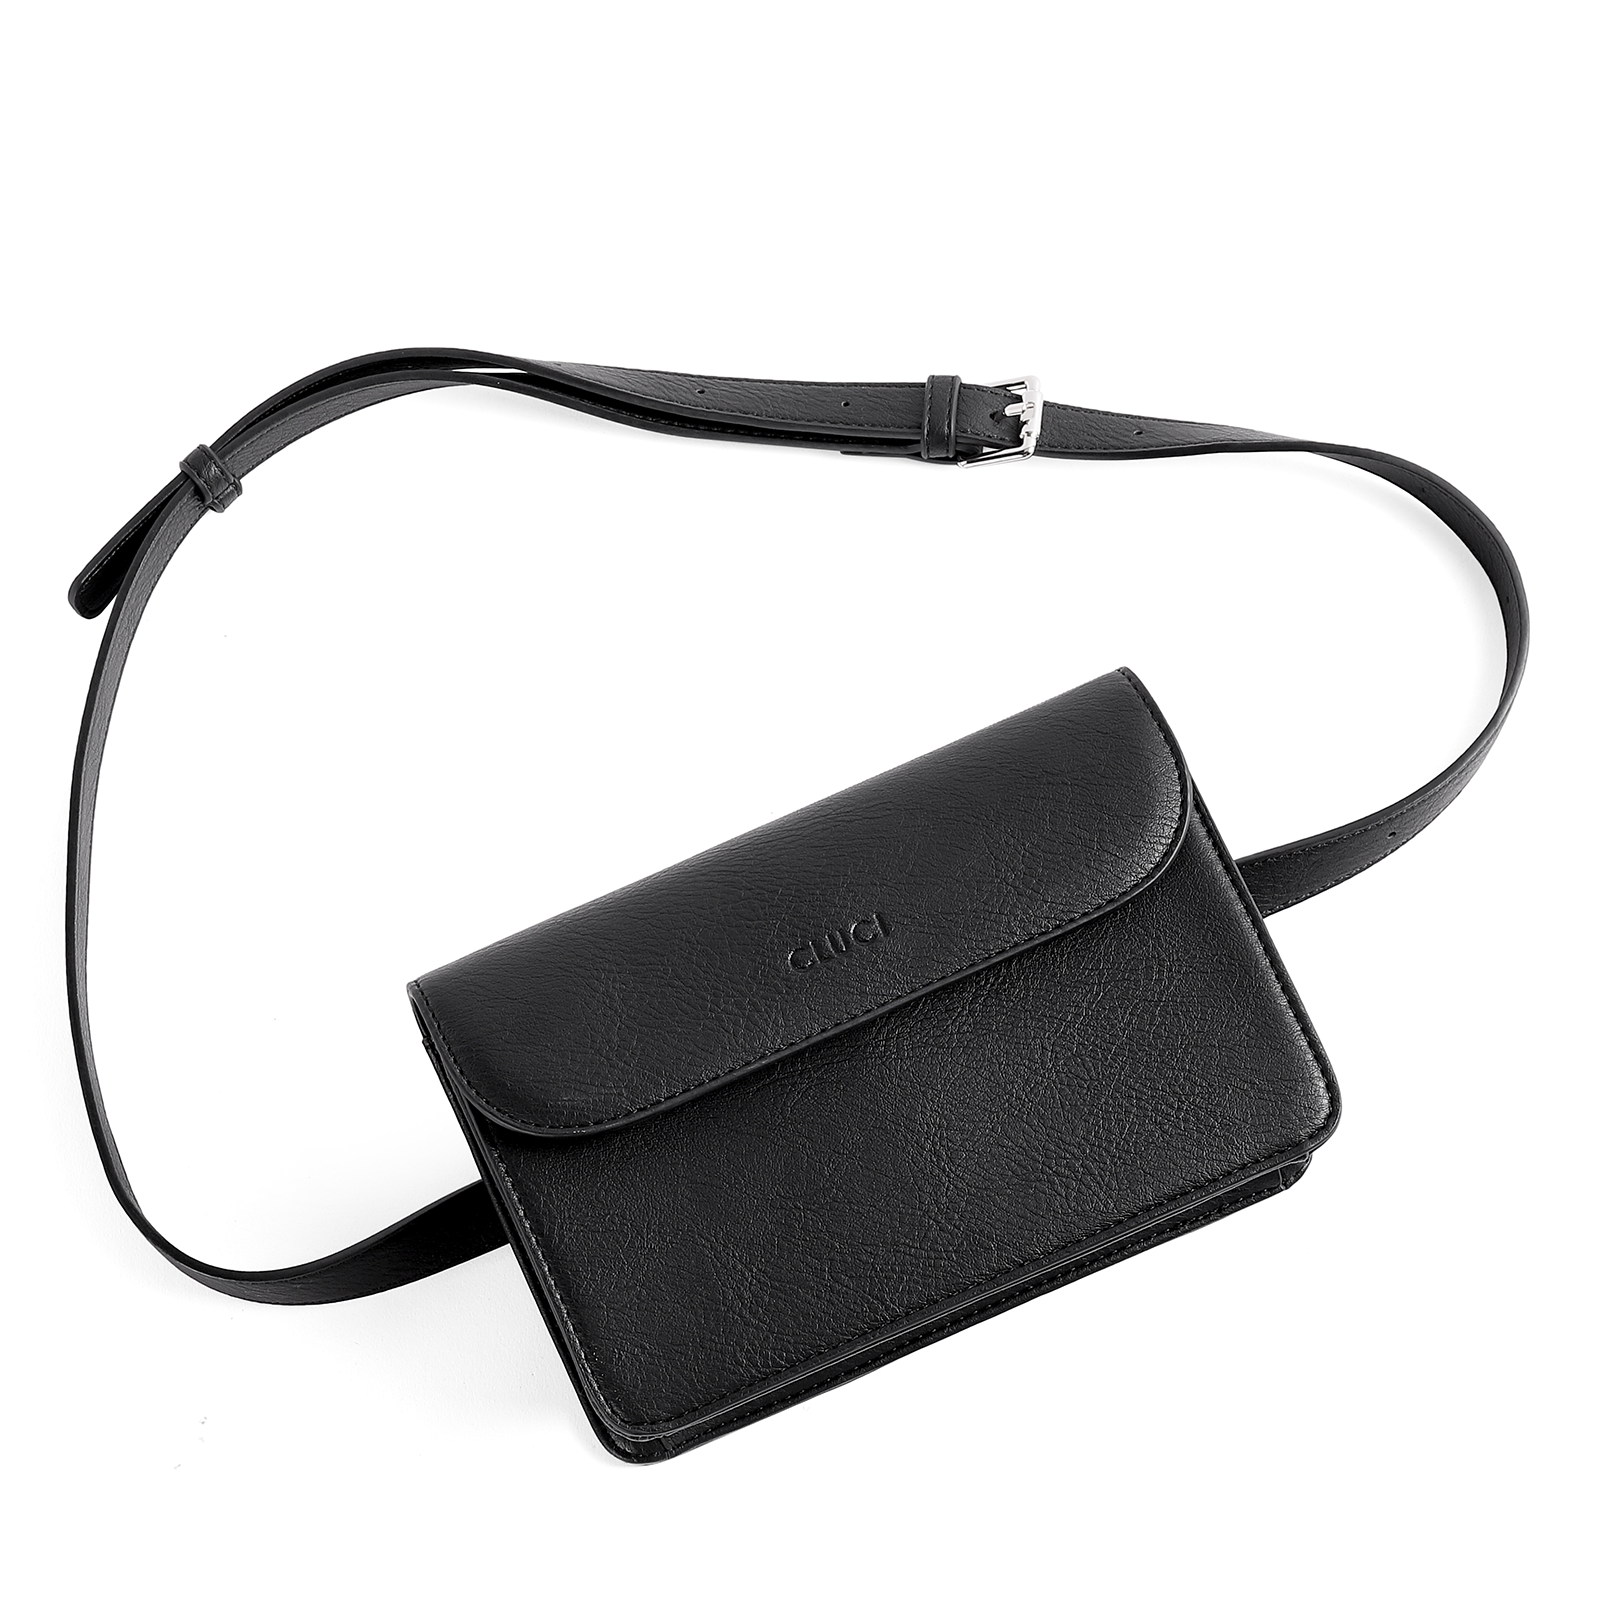 CLUCI Fanny Packs Crossbody Belt Bag Fashion Waist Bag with Adjustable Strap